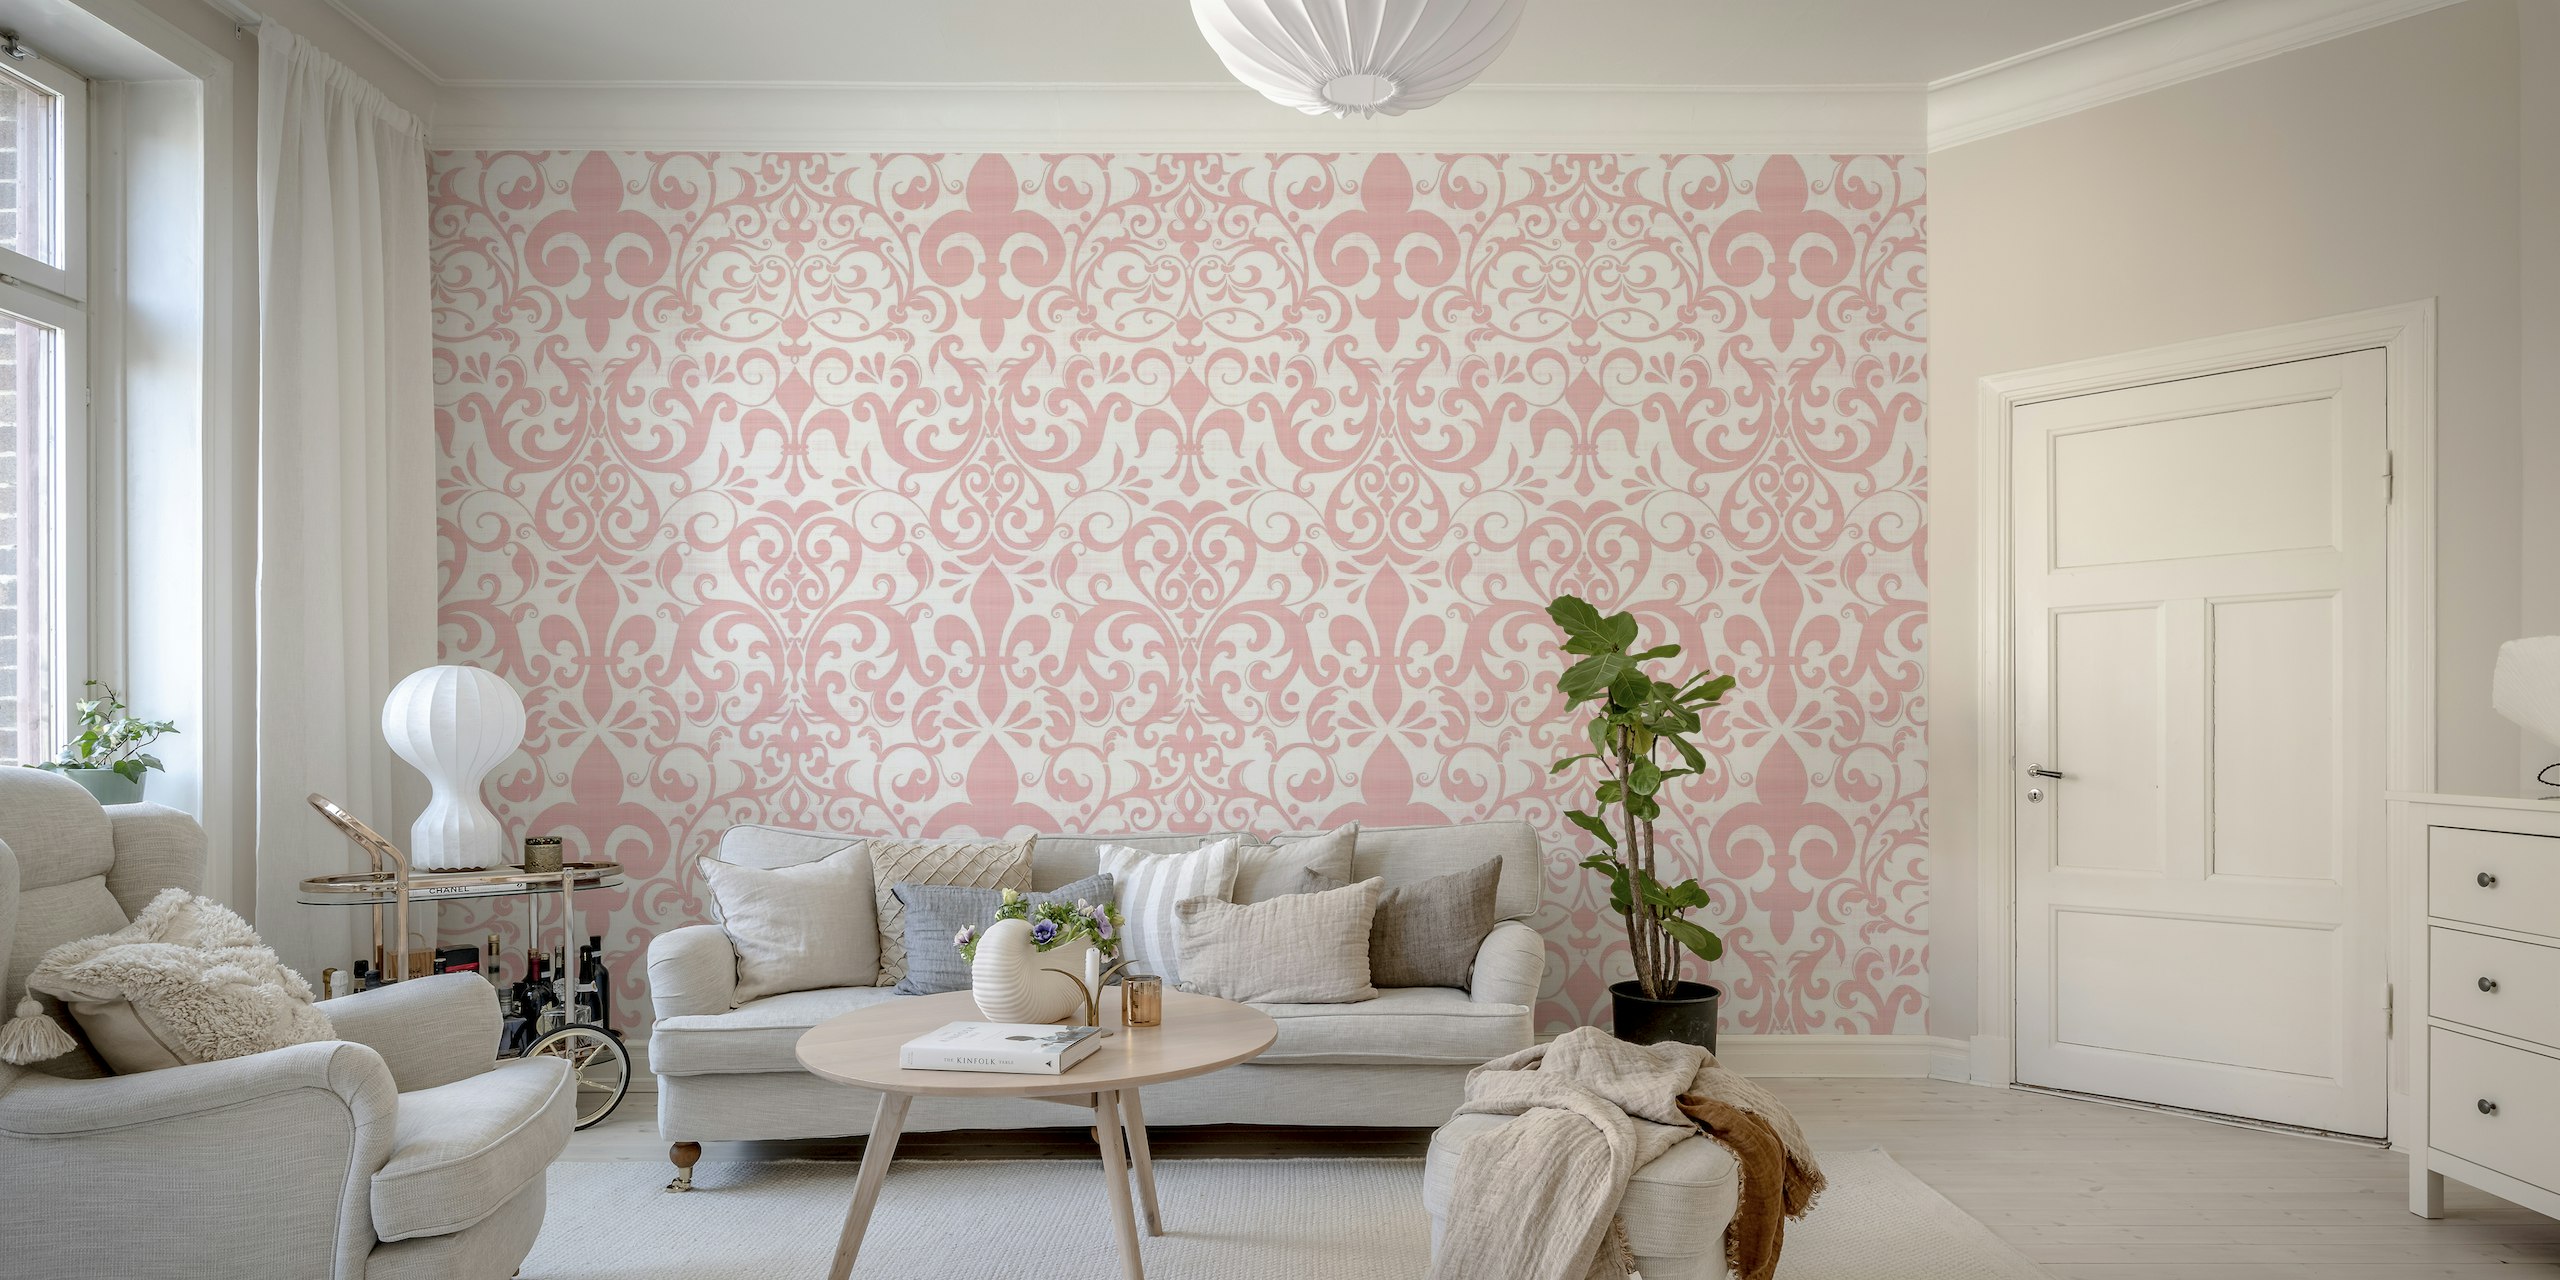 Pastelno ružičasta zidna slika s klasičnim fleur de lis i scrollwork uzorkom za izgled francuskog platna.